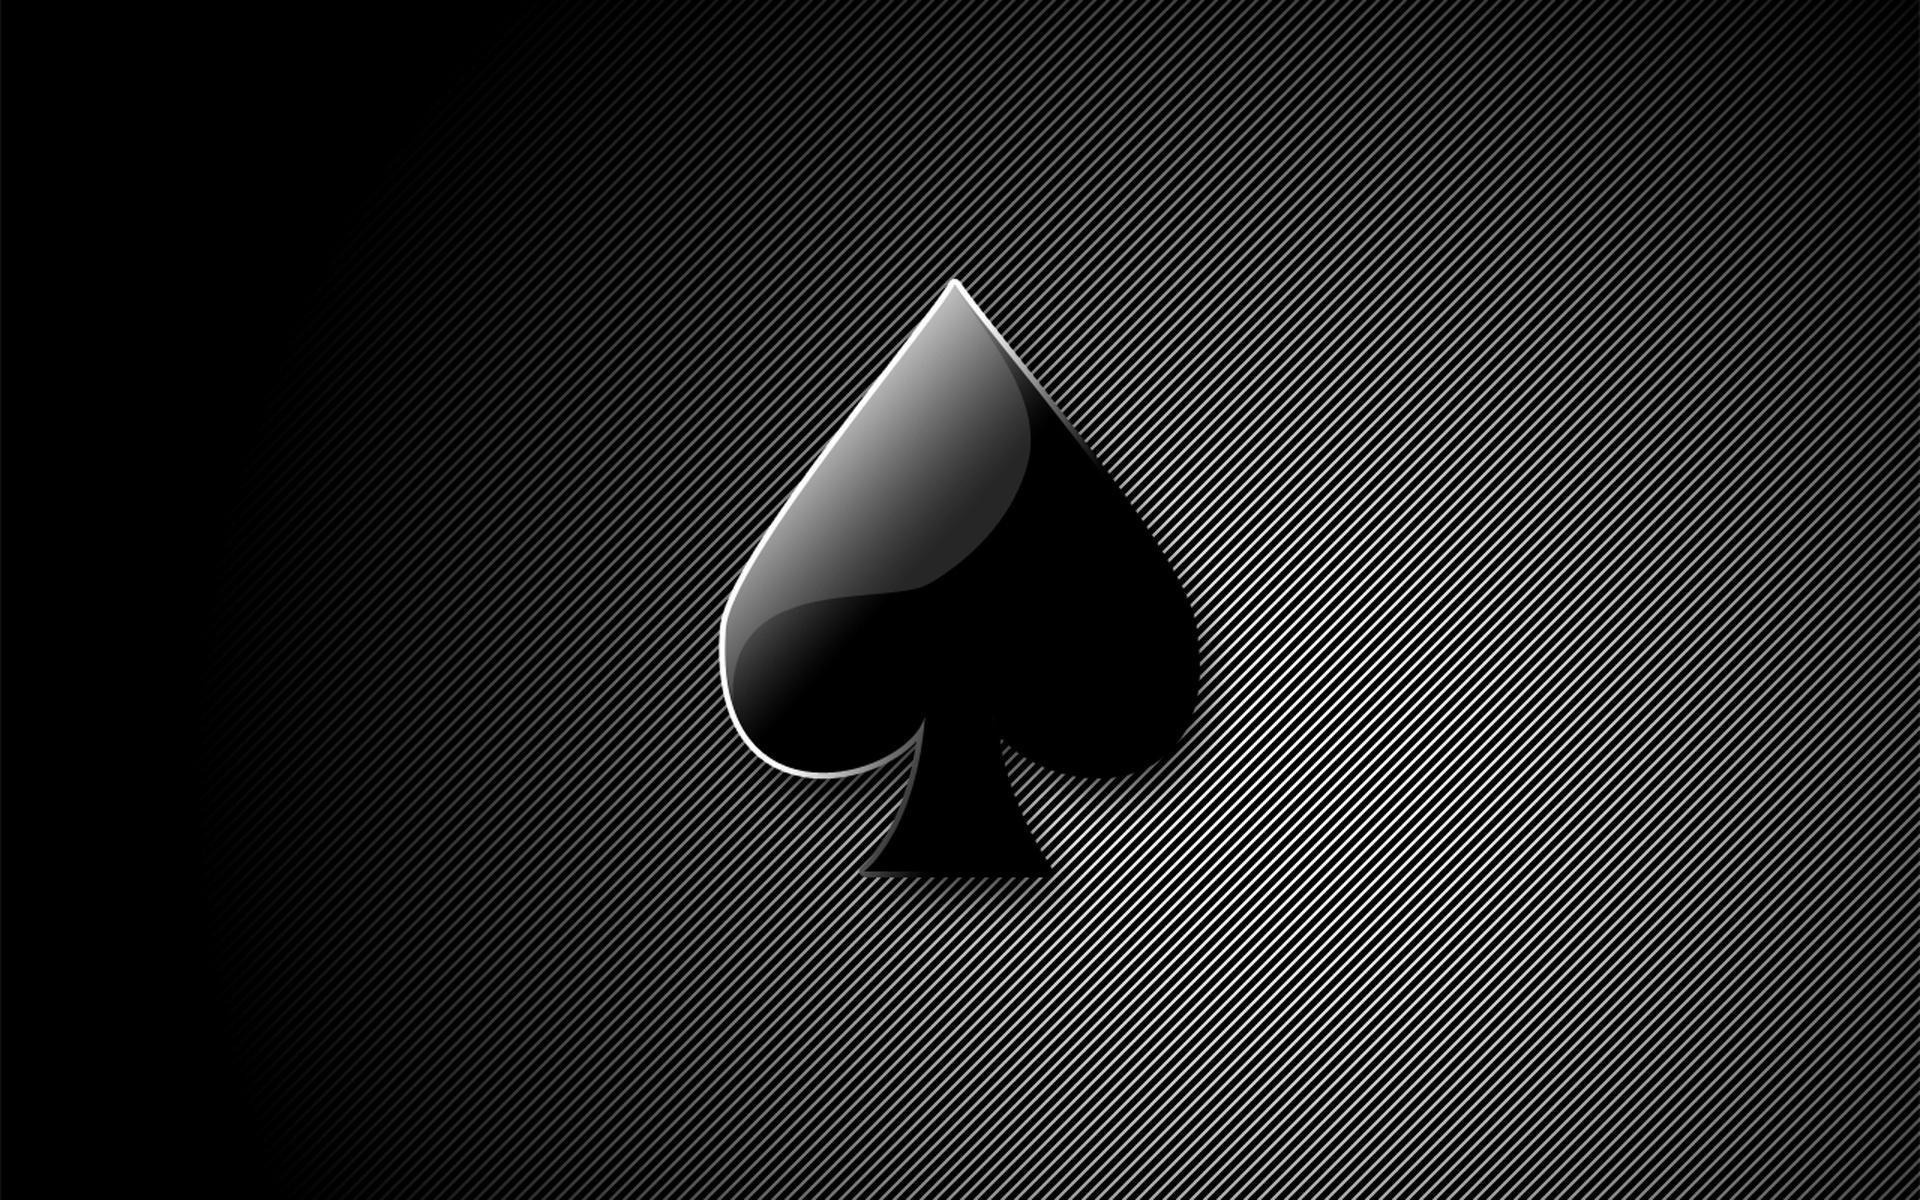 ace of spades epub download